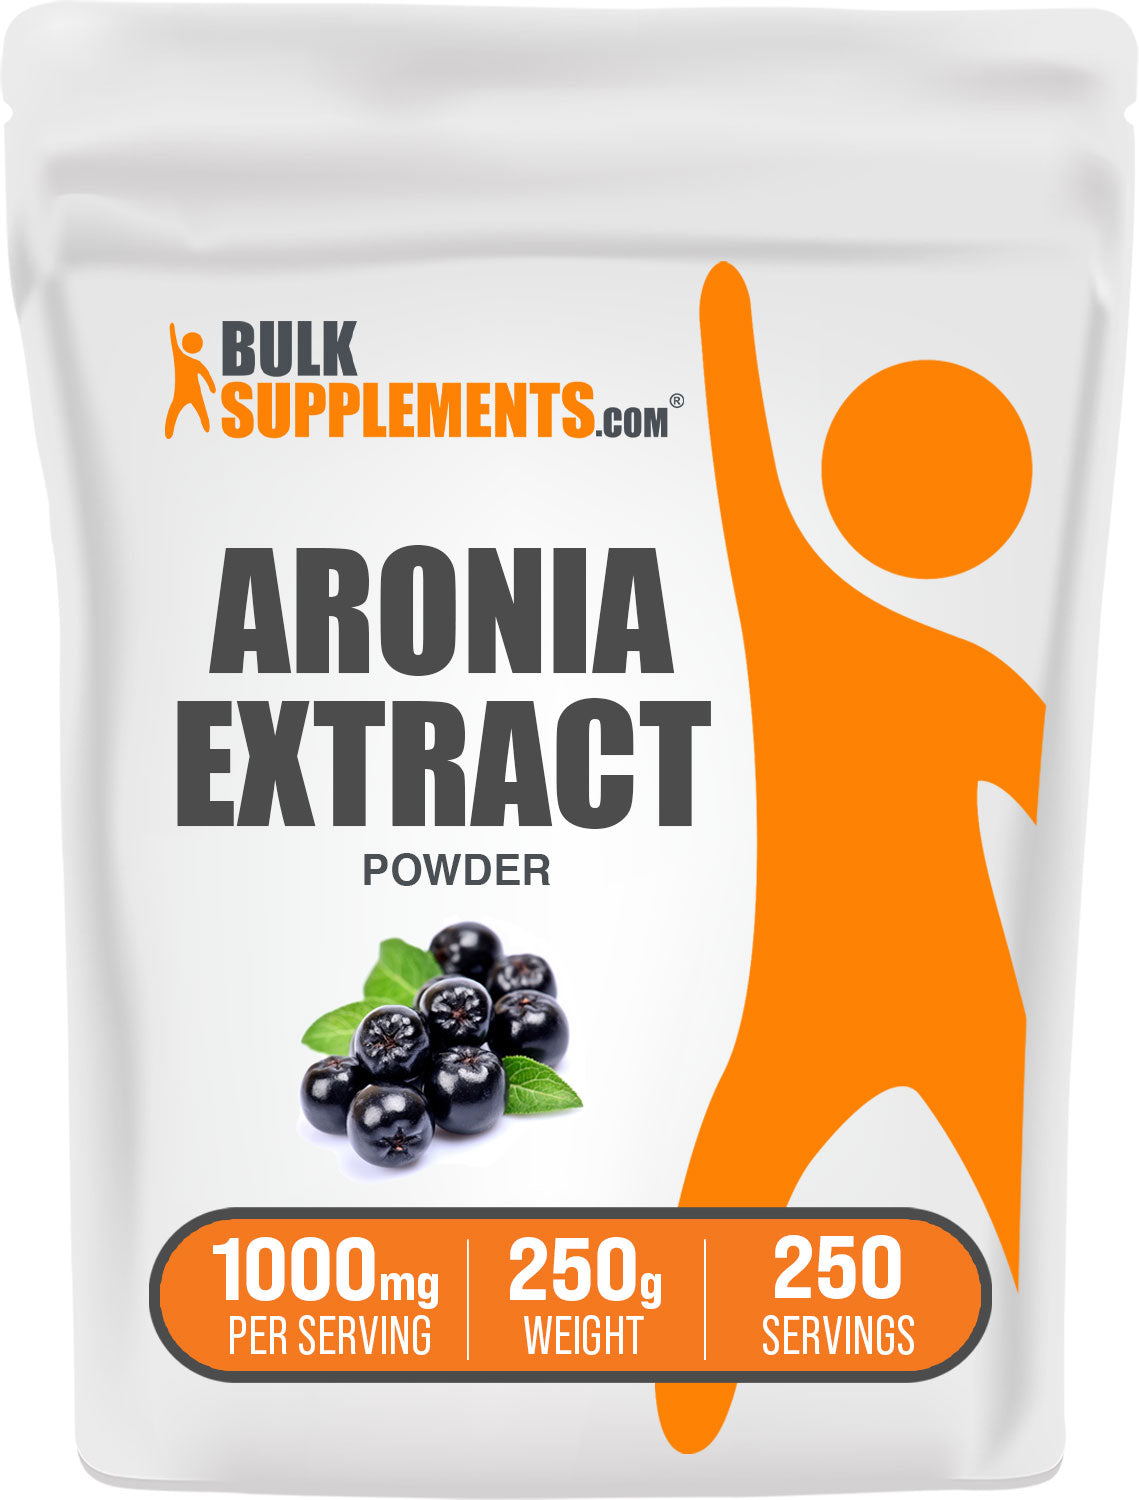 BulkSupplements.com Aronia Extract Powder 250g Bag